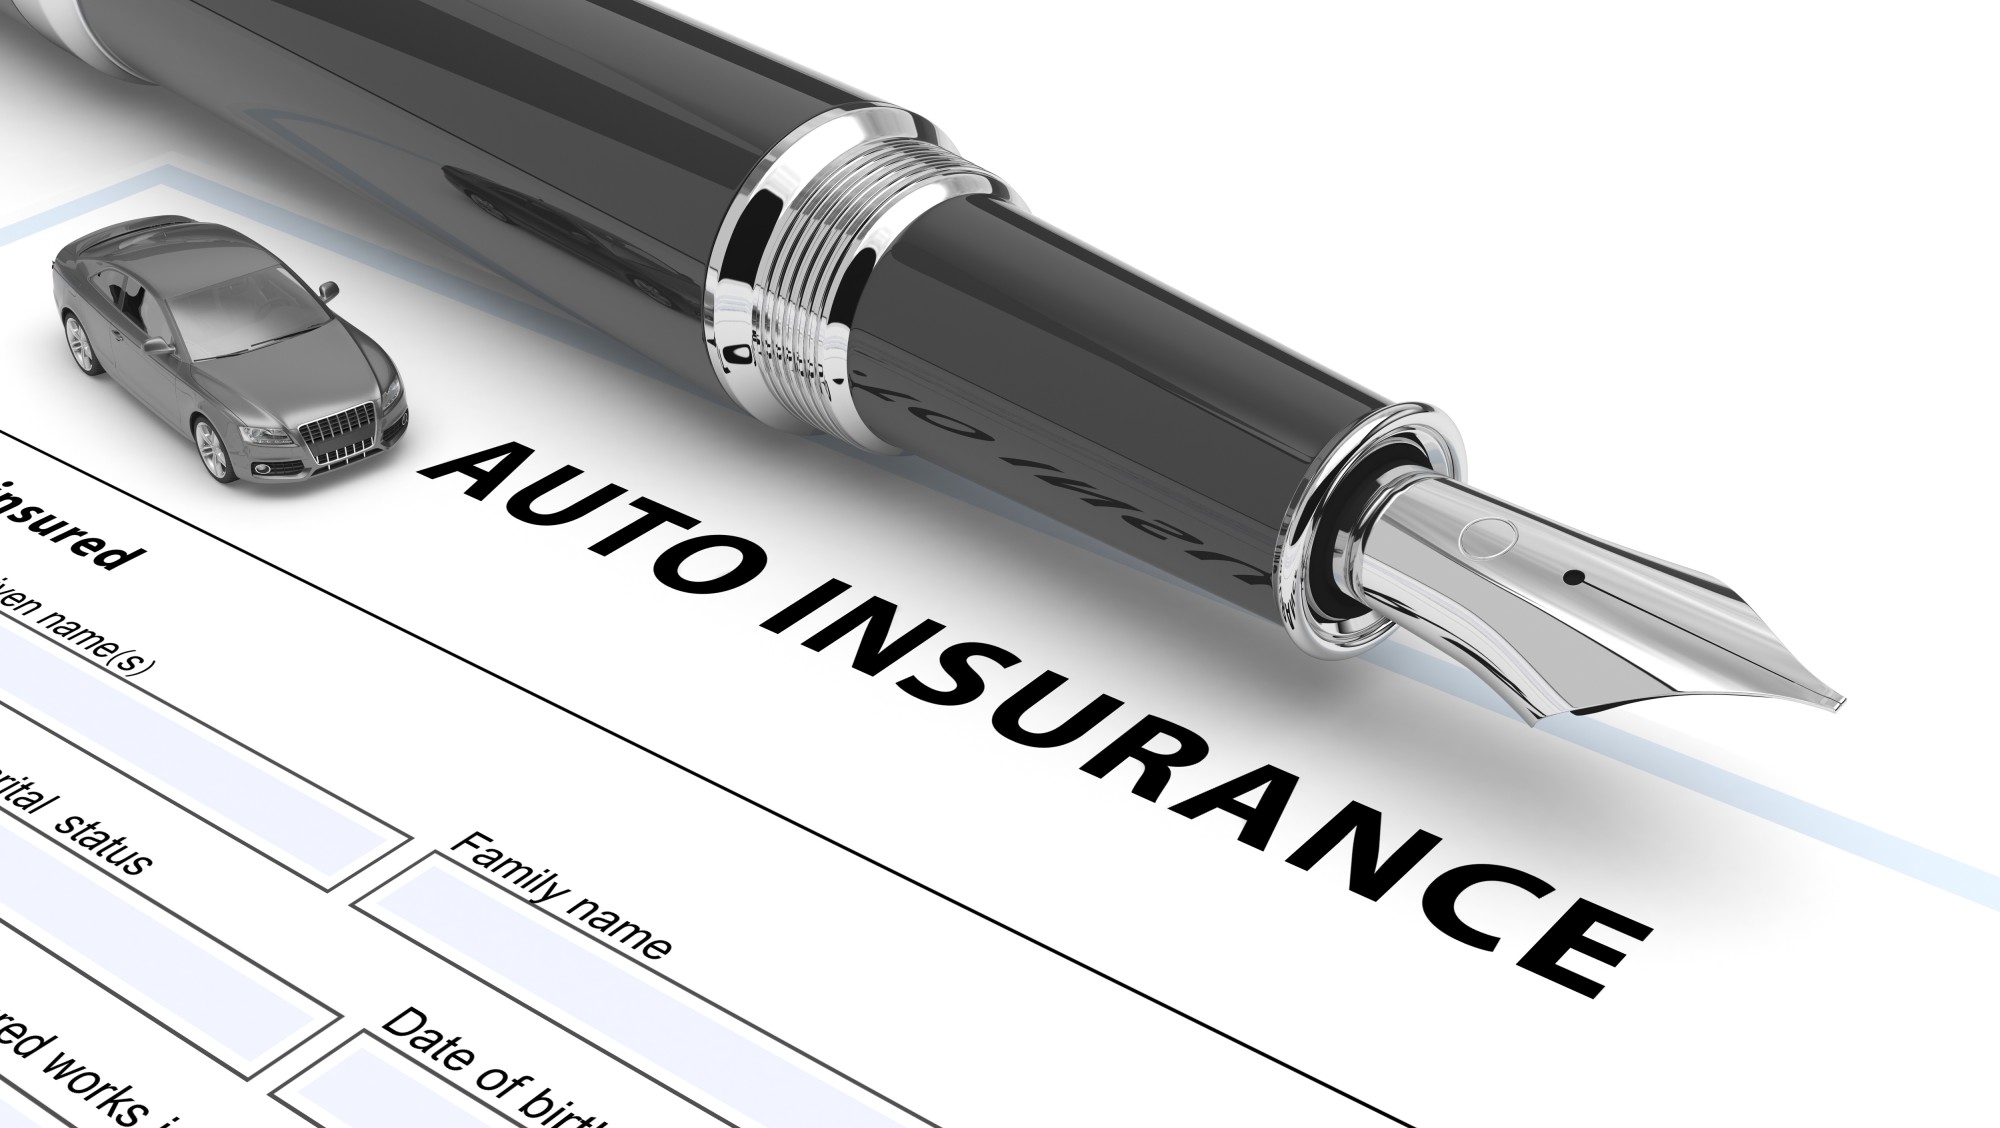 Comprehensive Auto Insurance